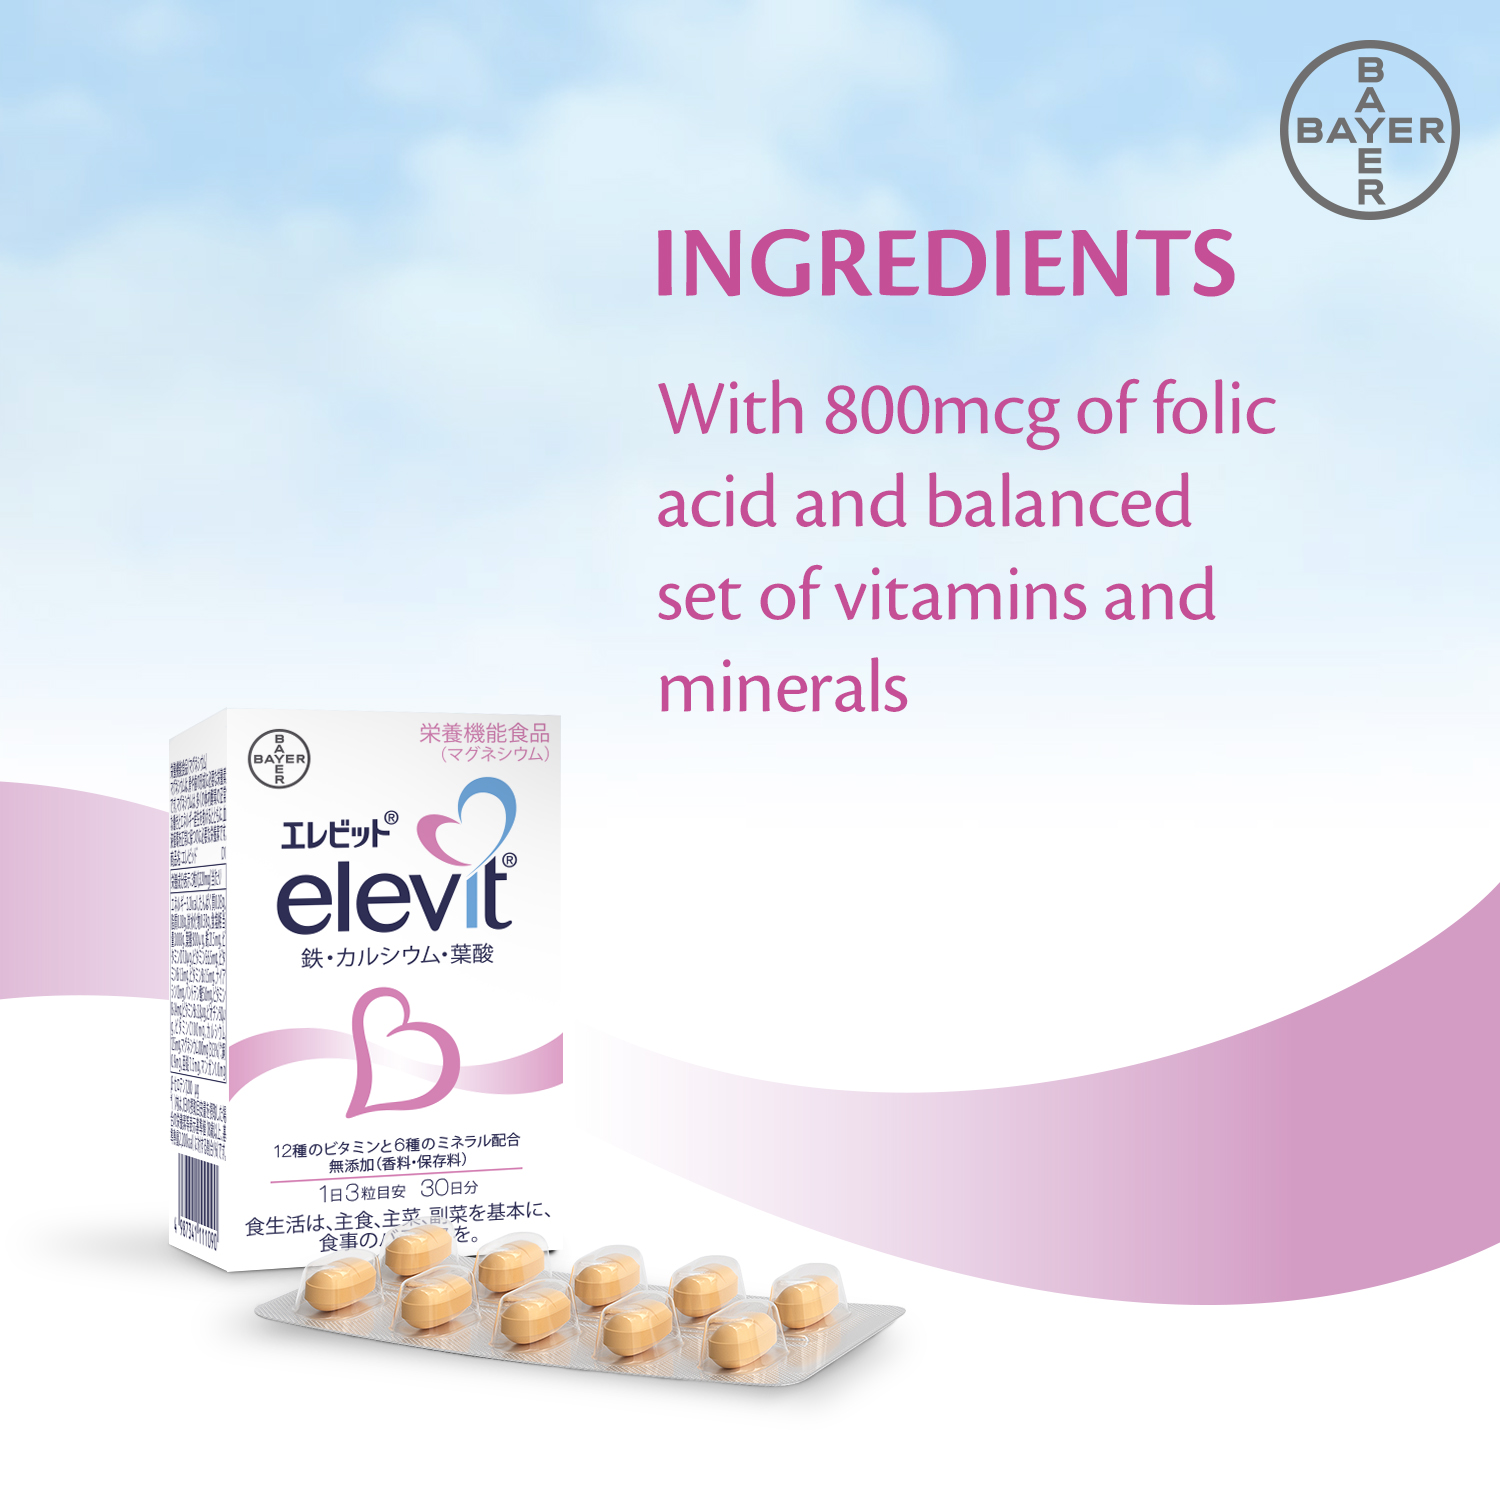 5.Elevit_eCommerce_Elevit_Pronatal_Japan_Ingredients